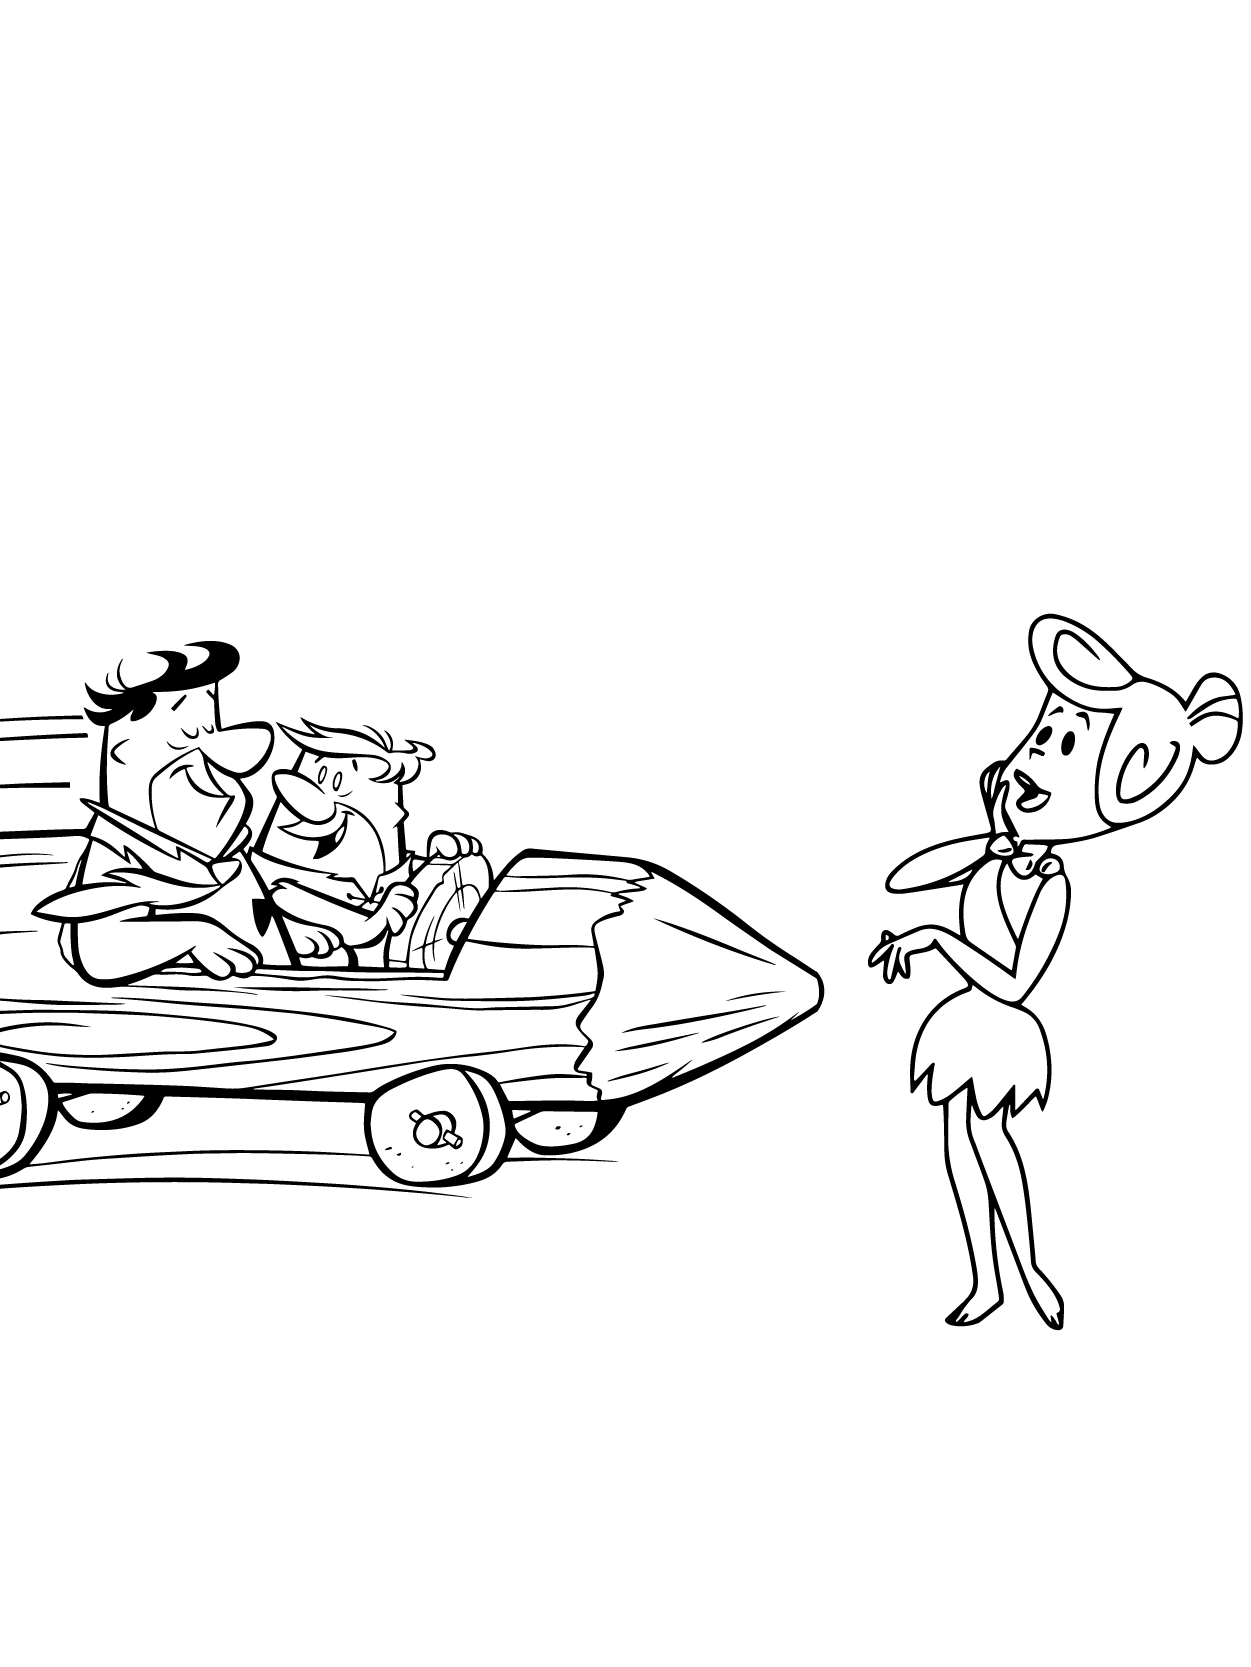 Fred Flintstone Driving a Car